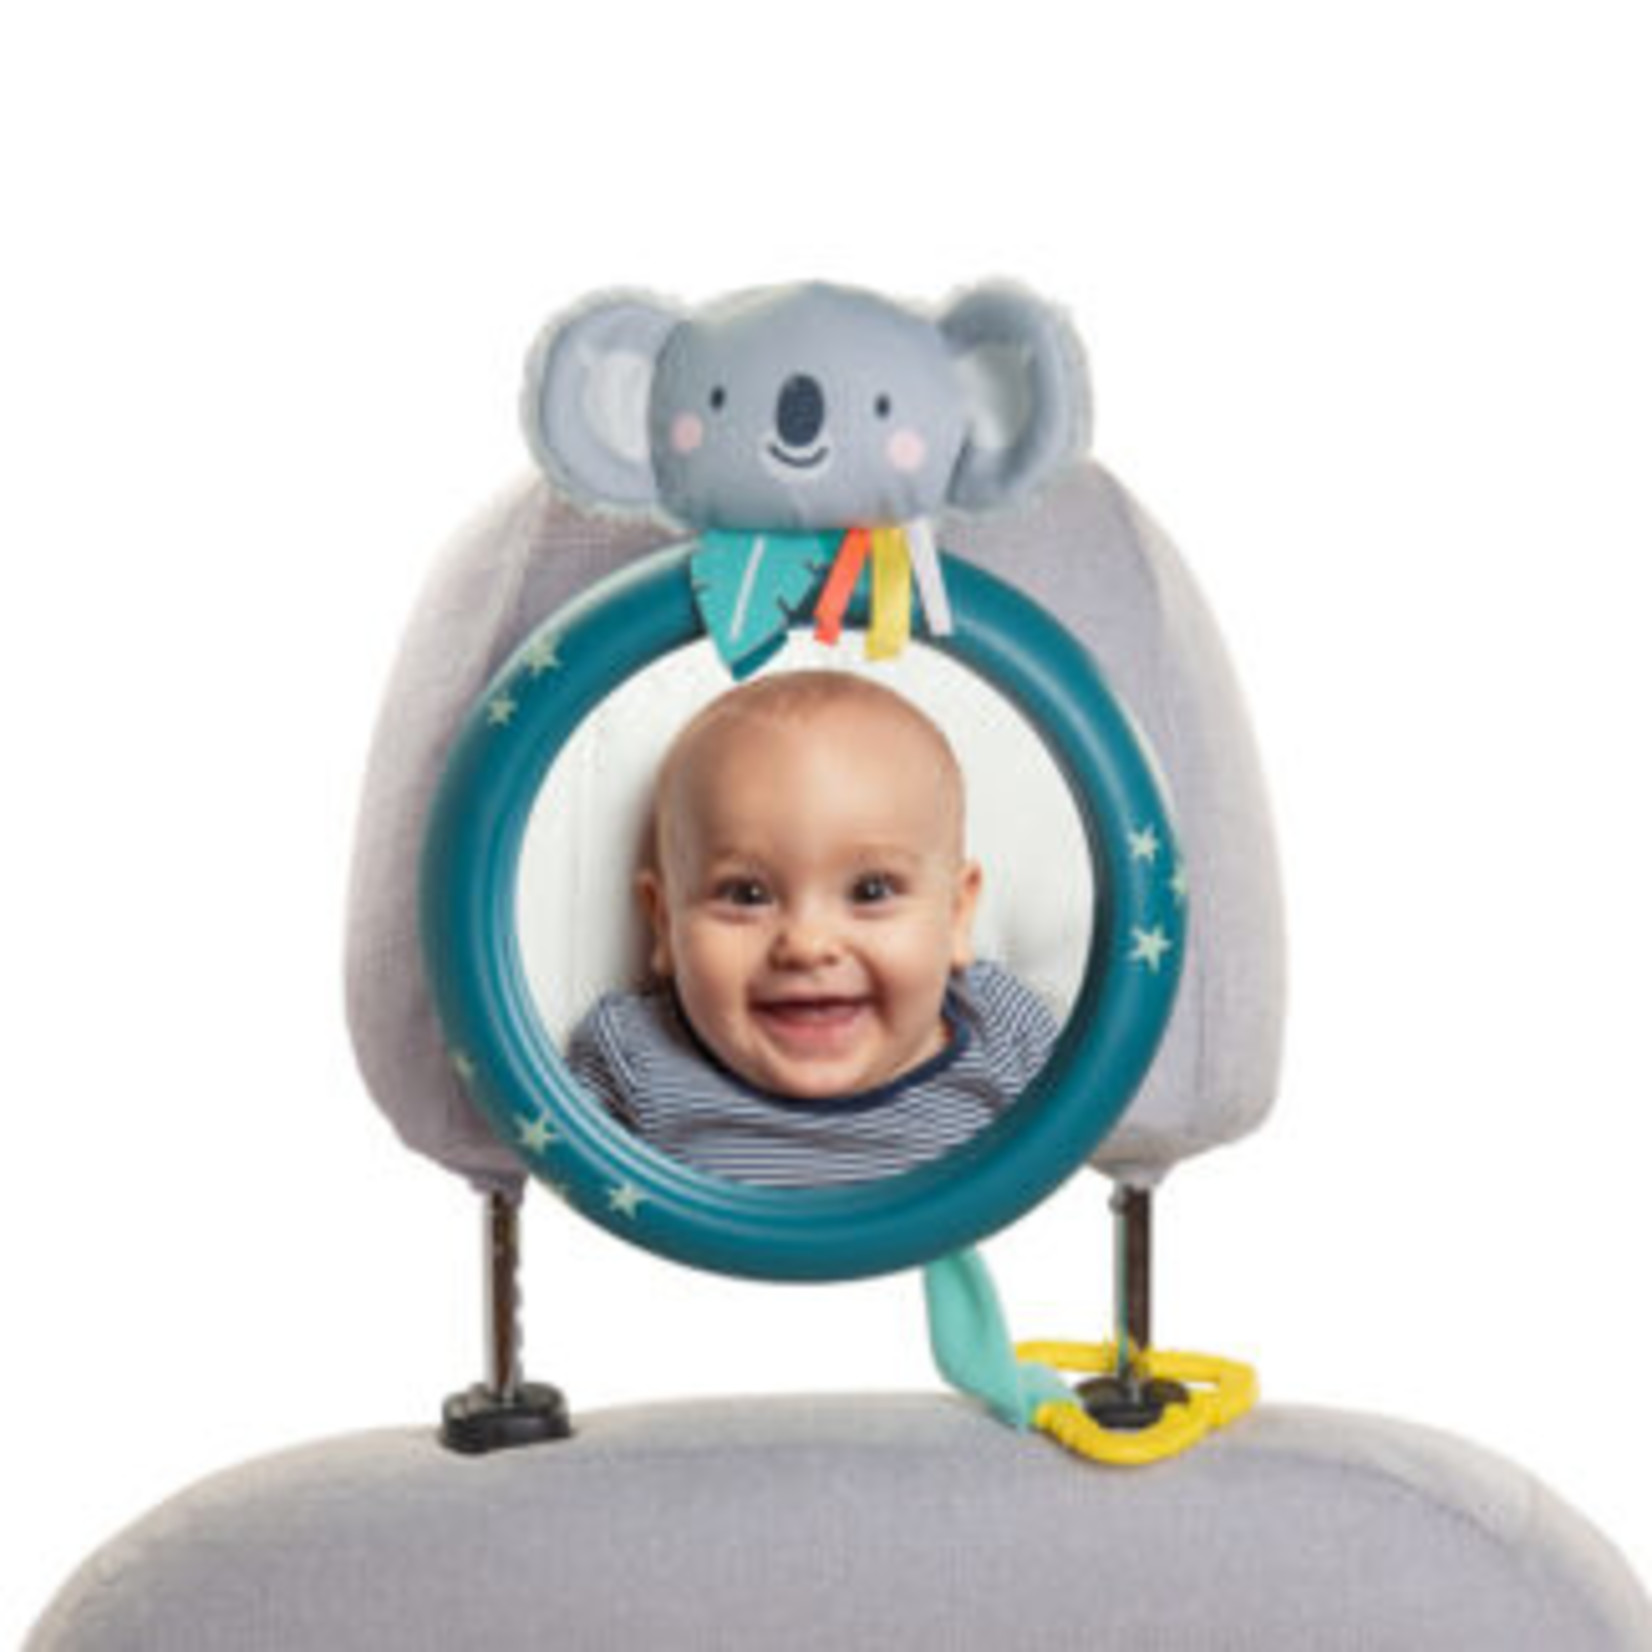 Taf Toys Easier Drive - Koala Car Mirror